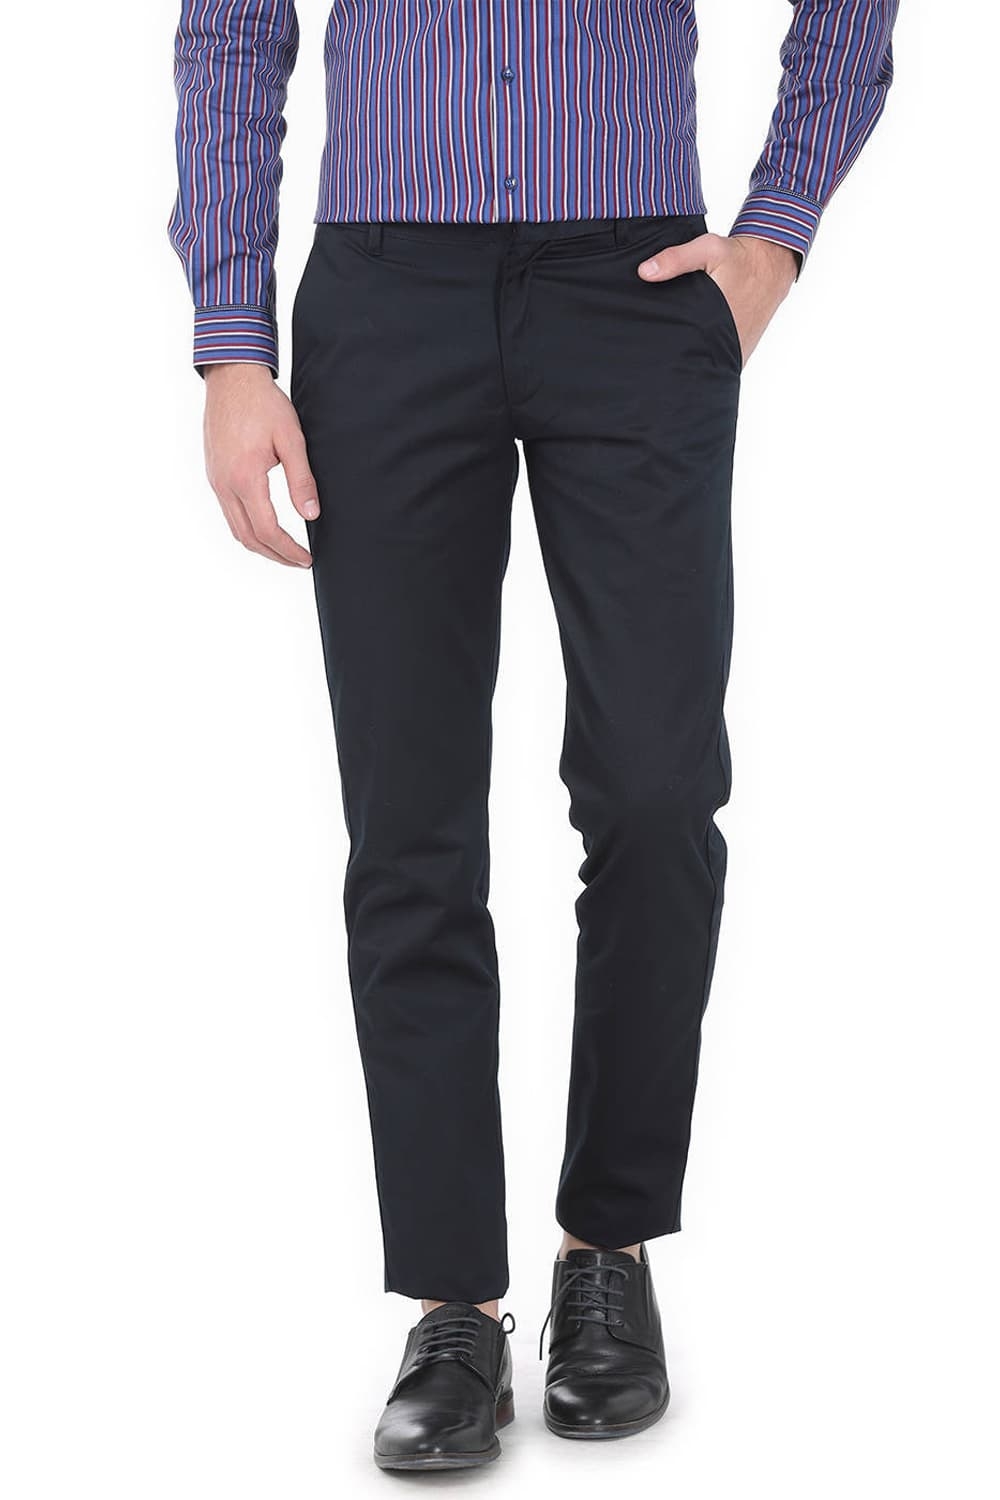 Basics | Basics Tapered Fit Navy Satin Trousers